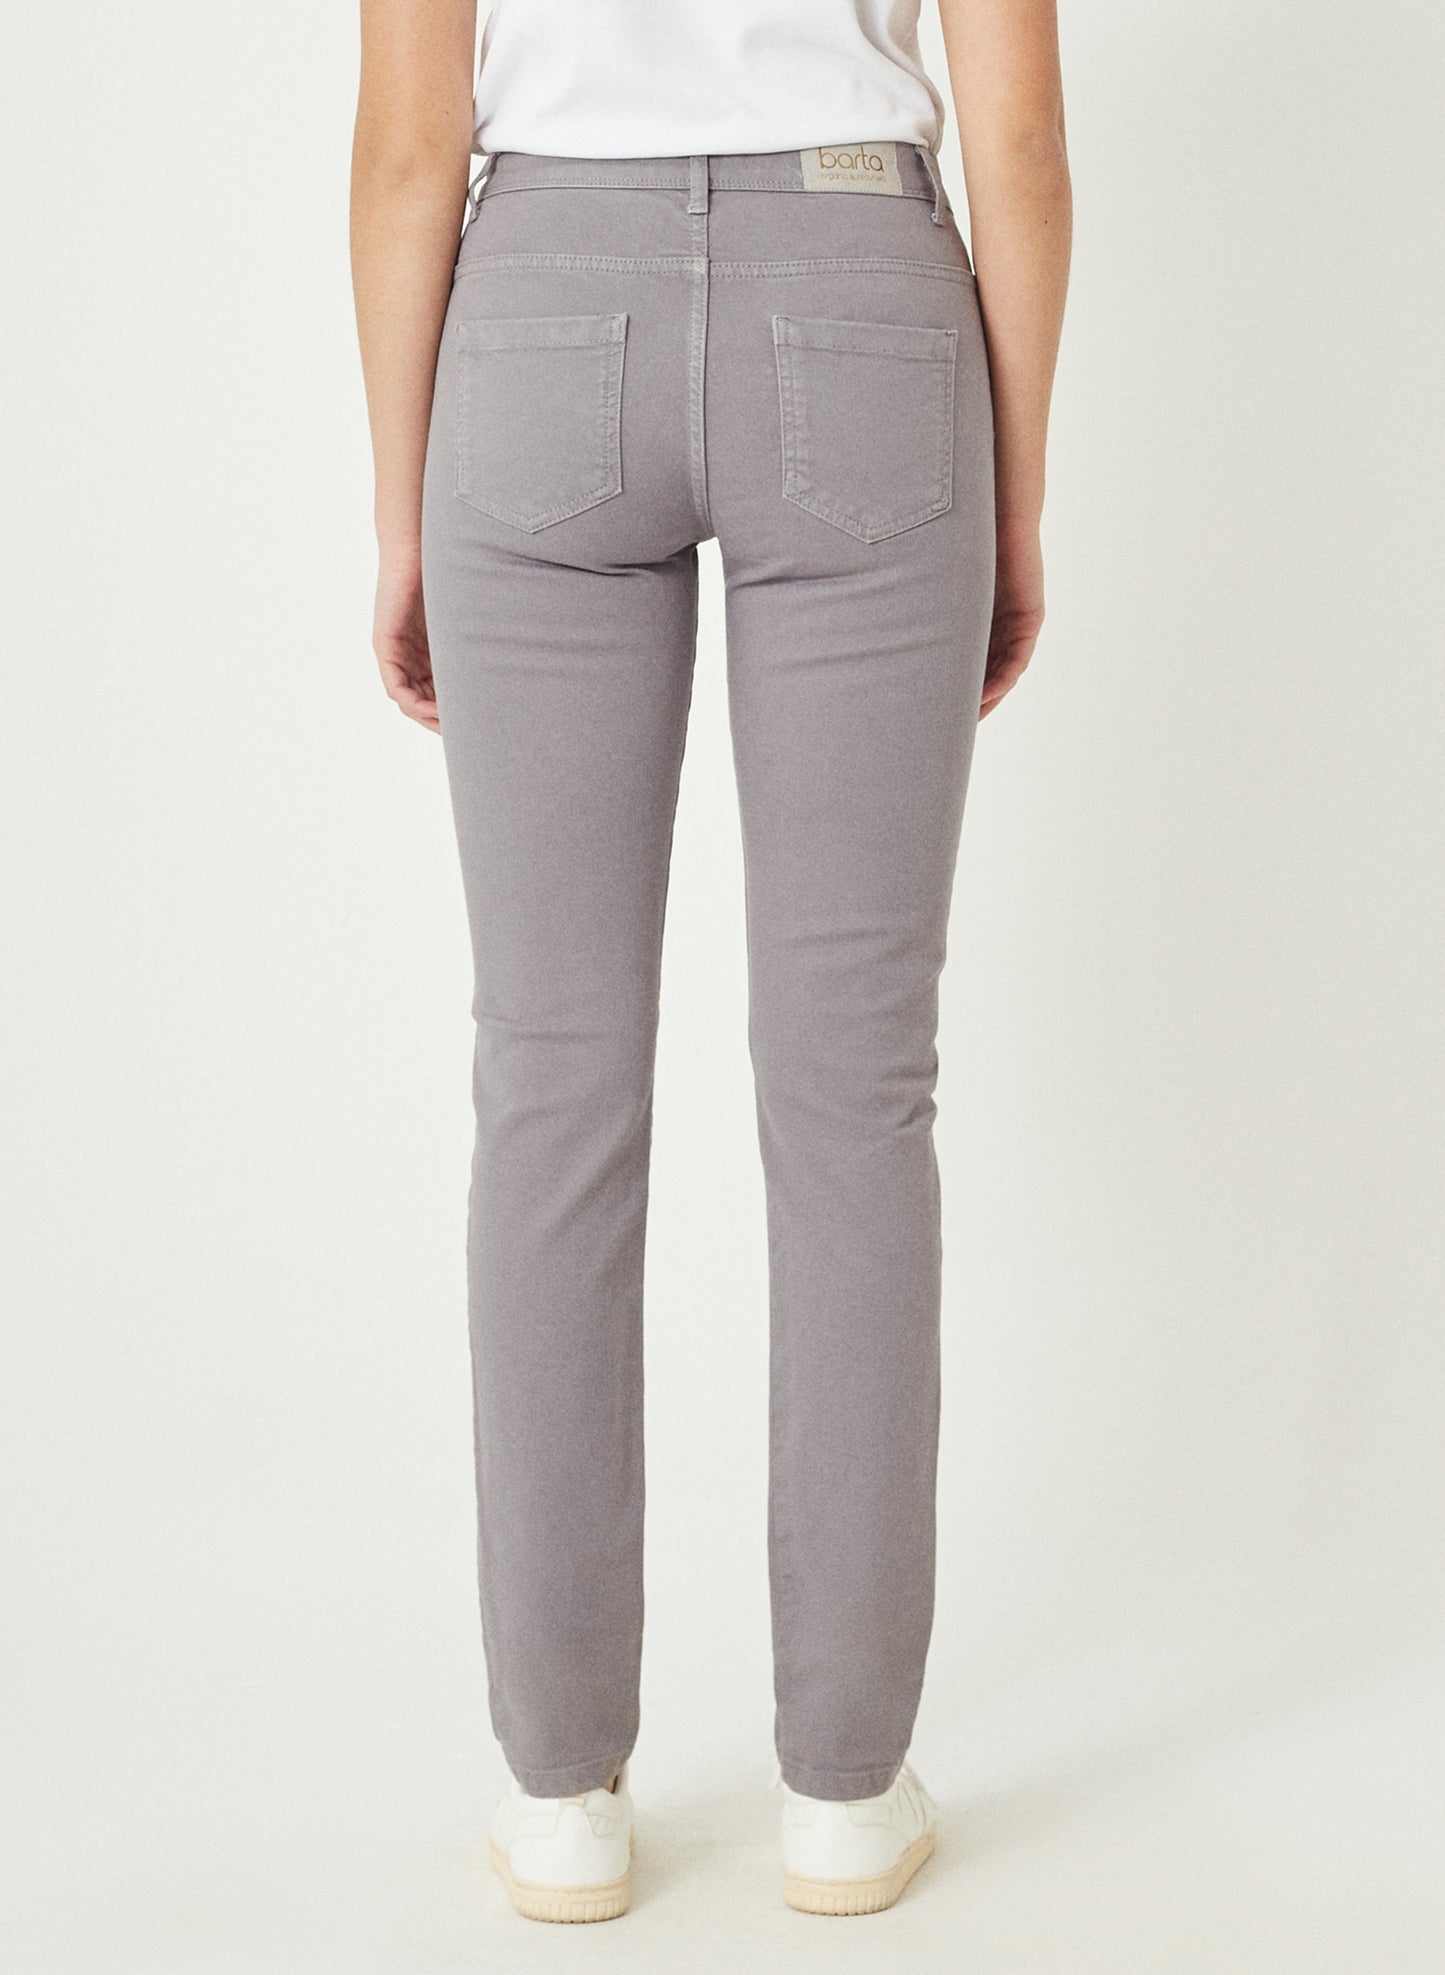 MINA - Slim Fit Denim Jeans Pant - Grey